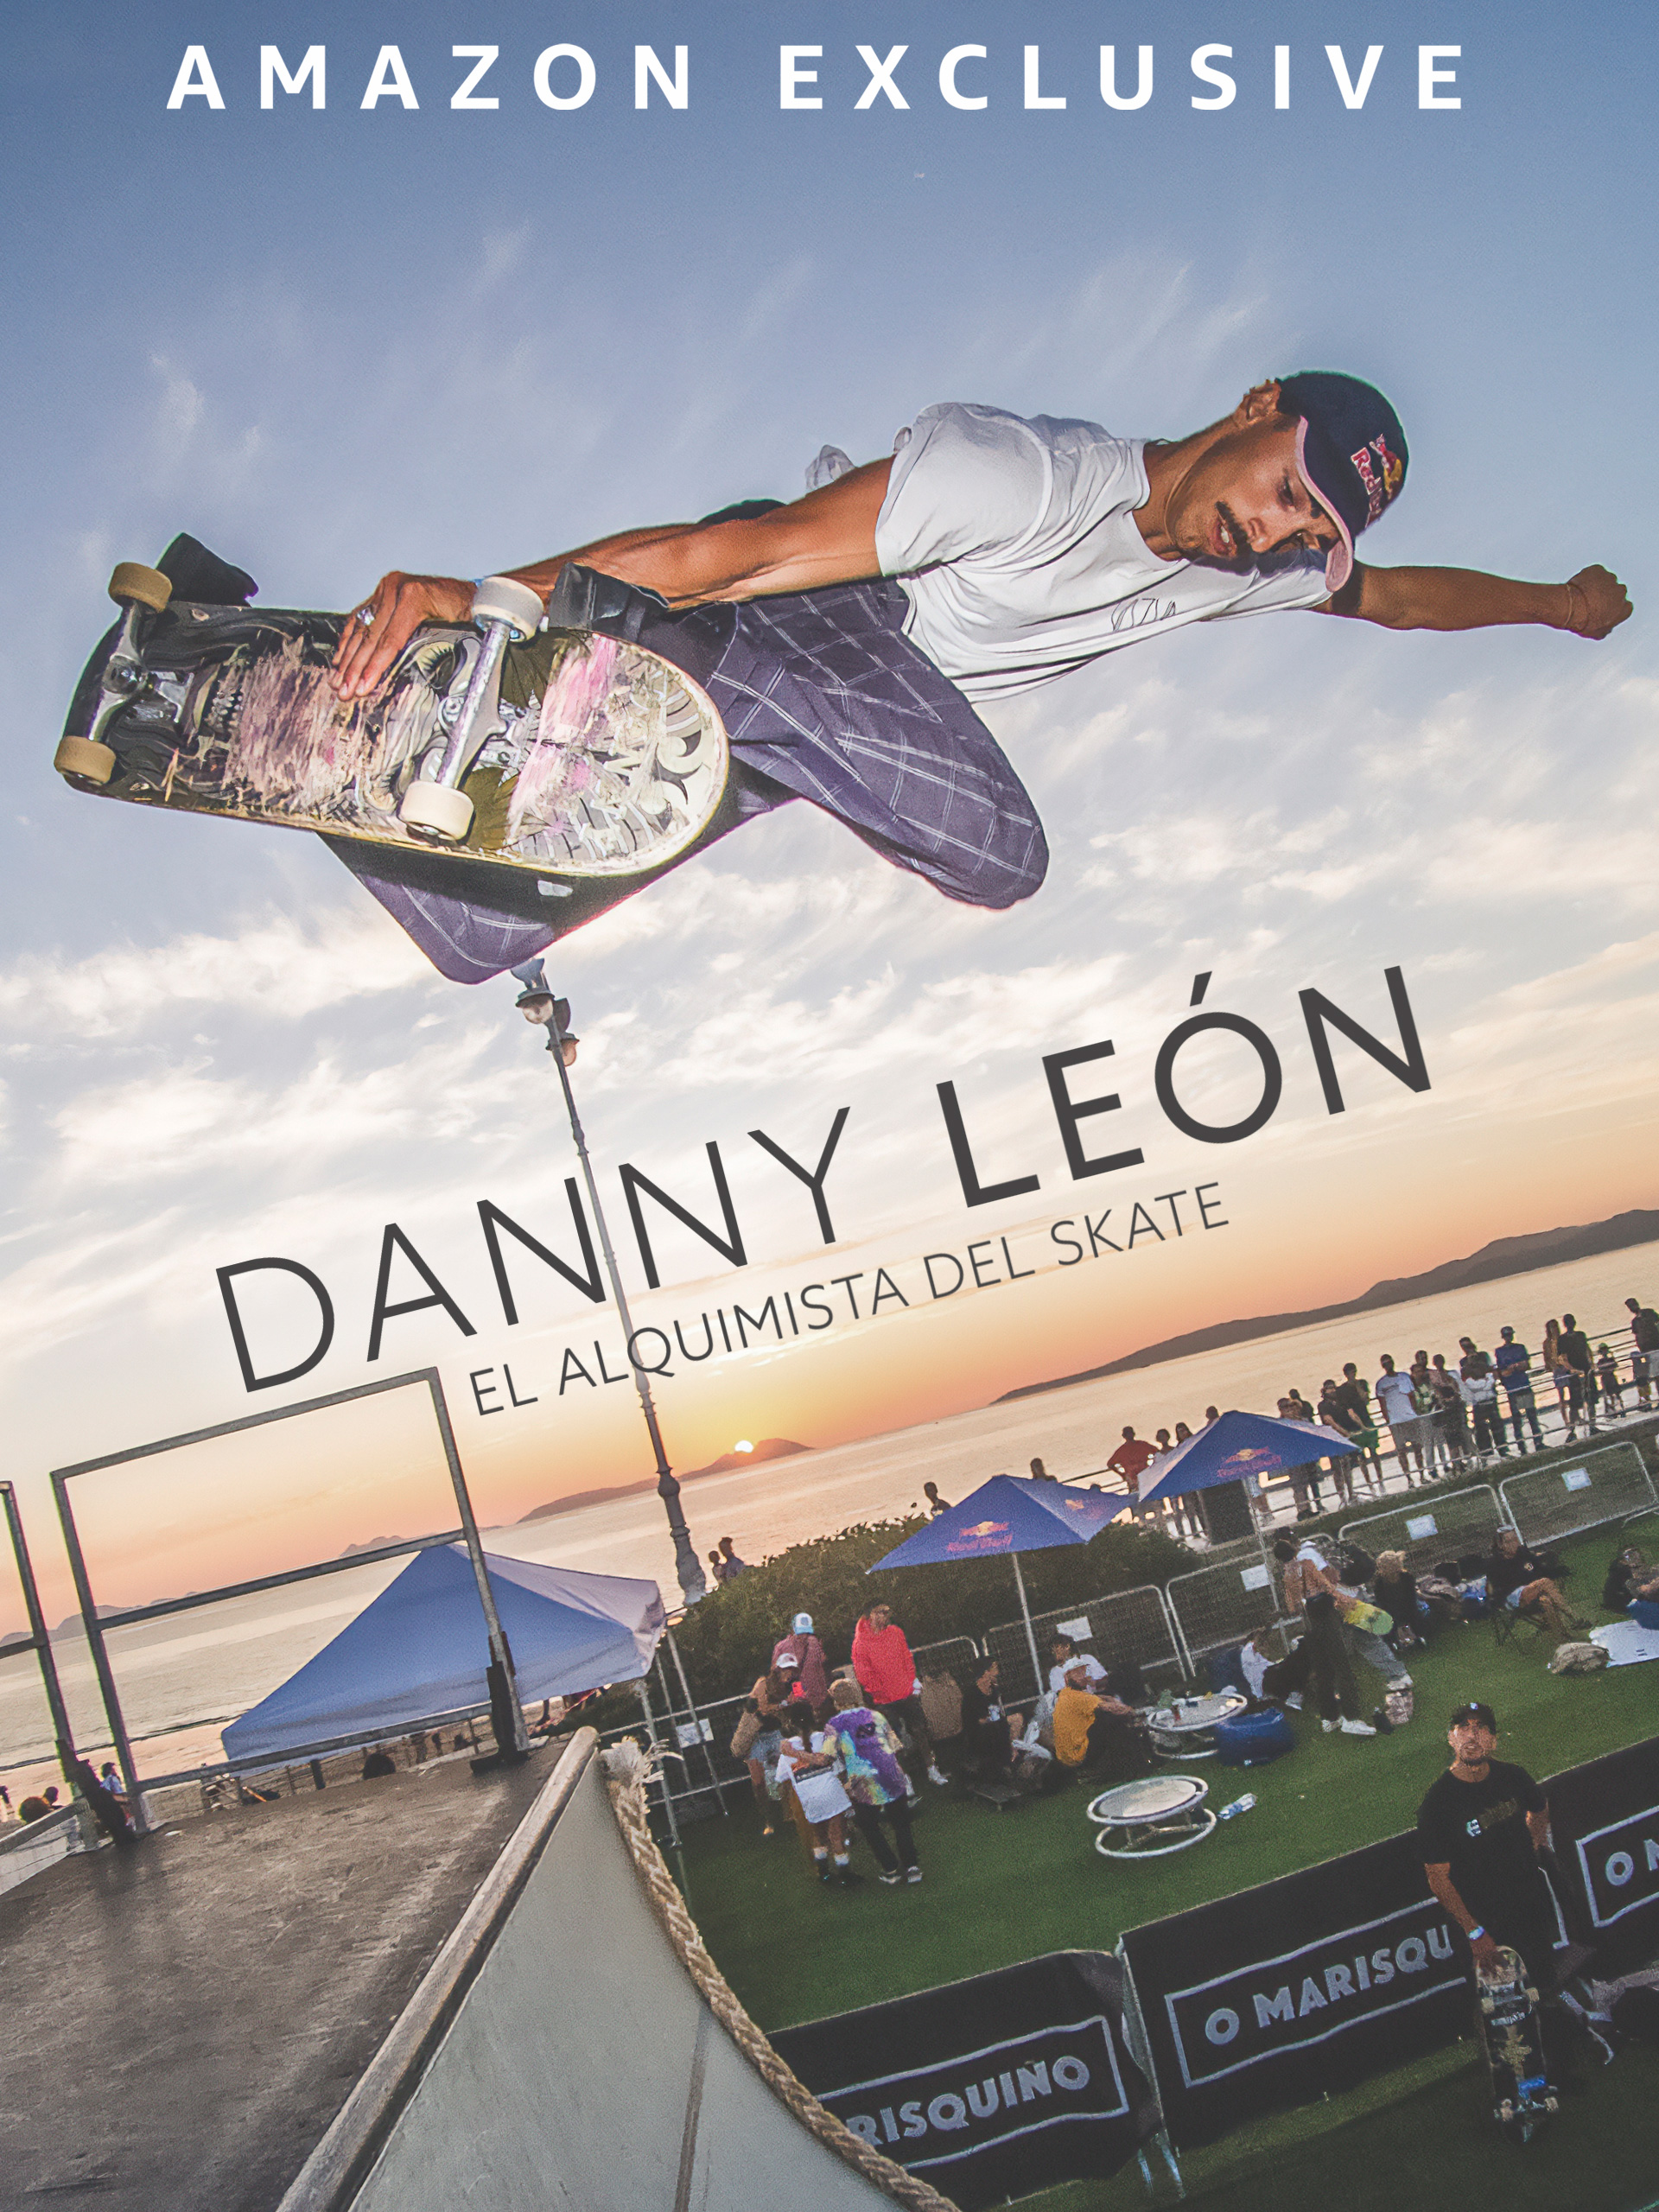 Caratula de Danny León: El alquimista del skate (Danny León: L'alquimista de l'skate) 